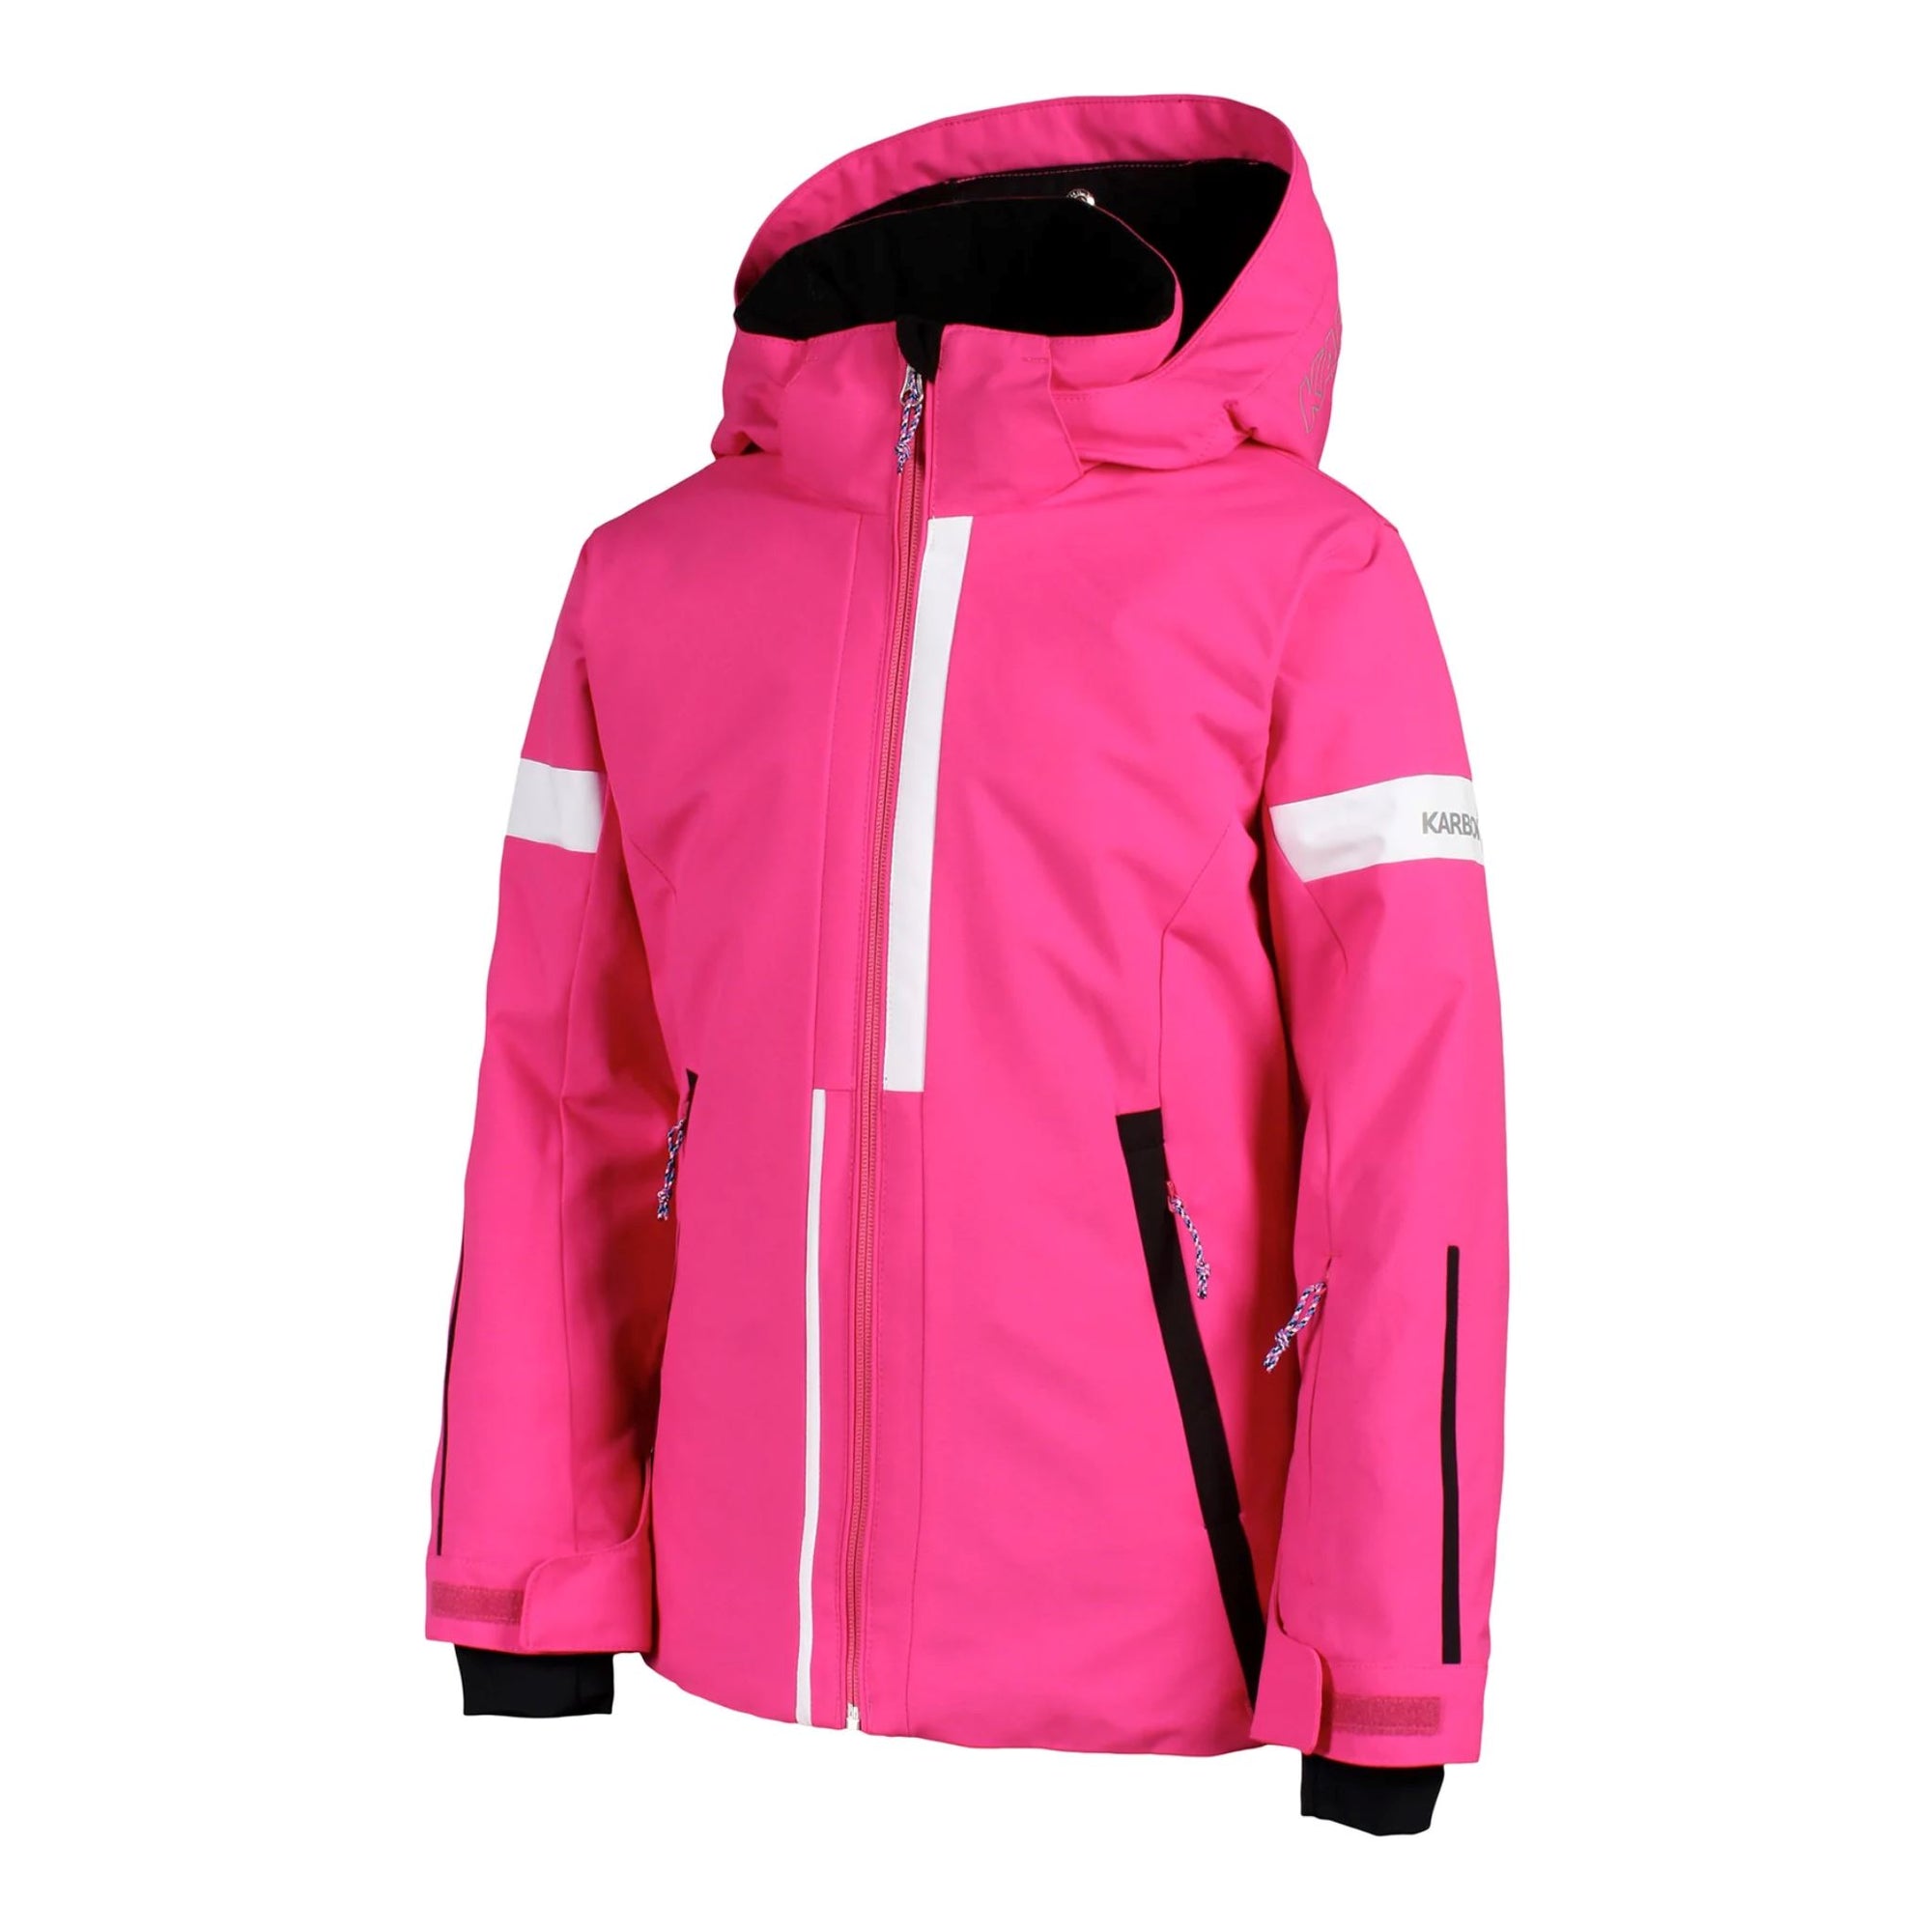 Girls Karbon Magic Jacket - Hot Pink Jackets Karbon 8 INTL / 8 AU 